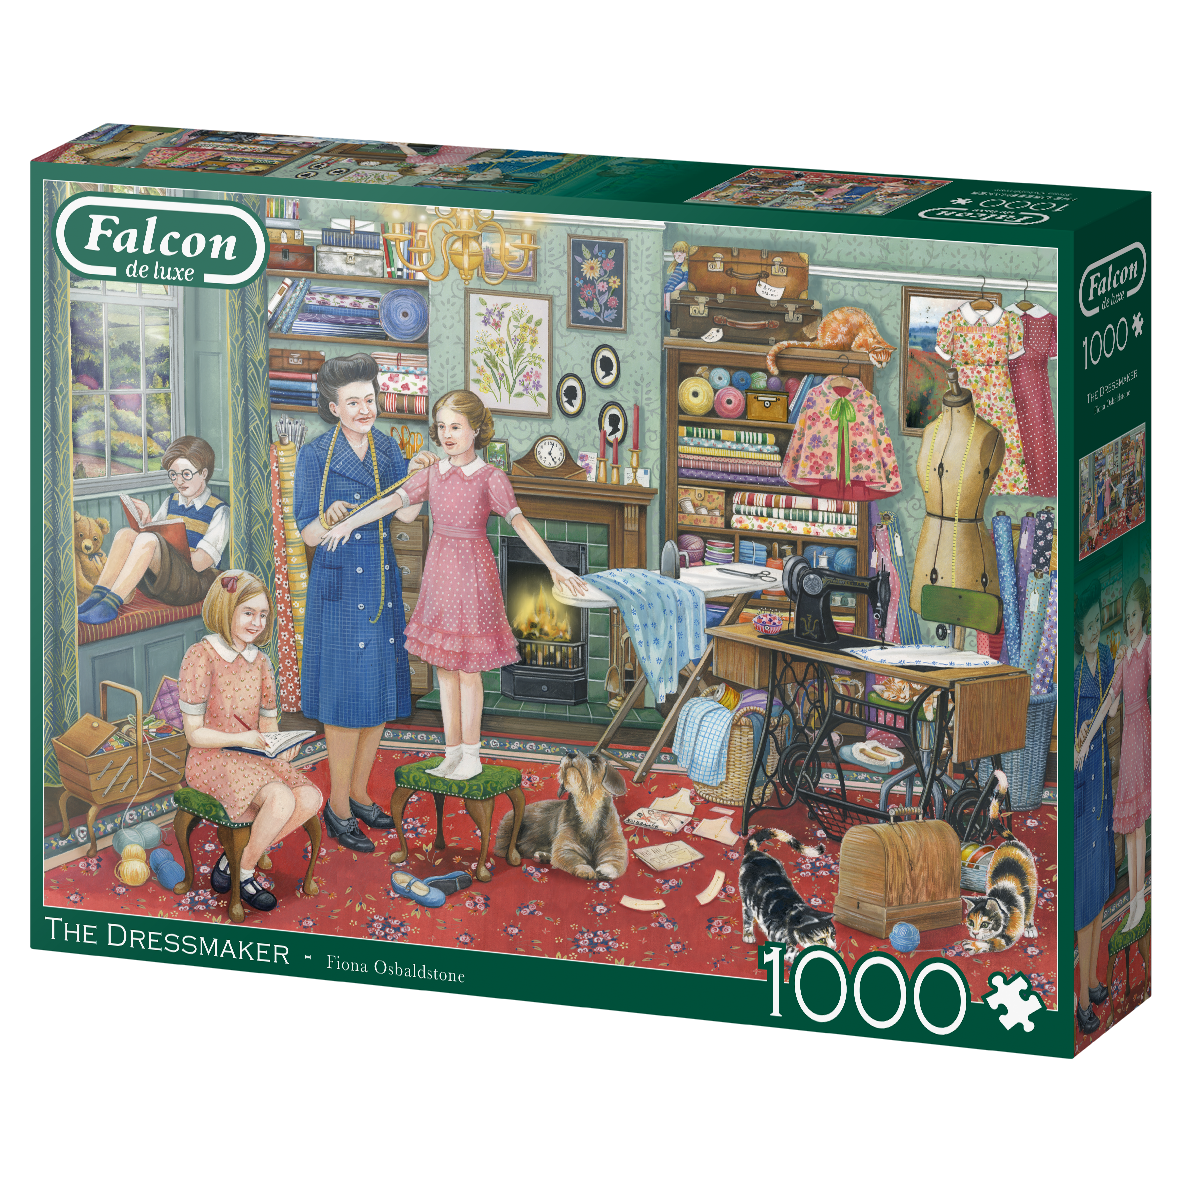 Falcon De Luxe - The Dressmaker - 1000 Piece Jigsaw Puzzle